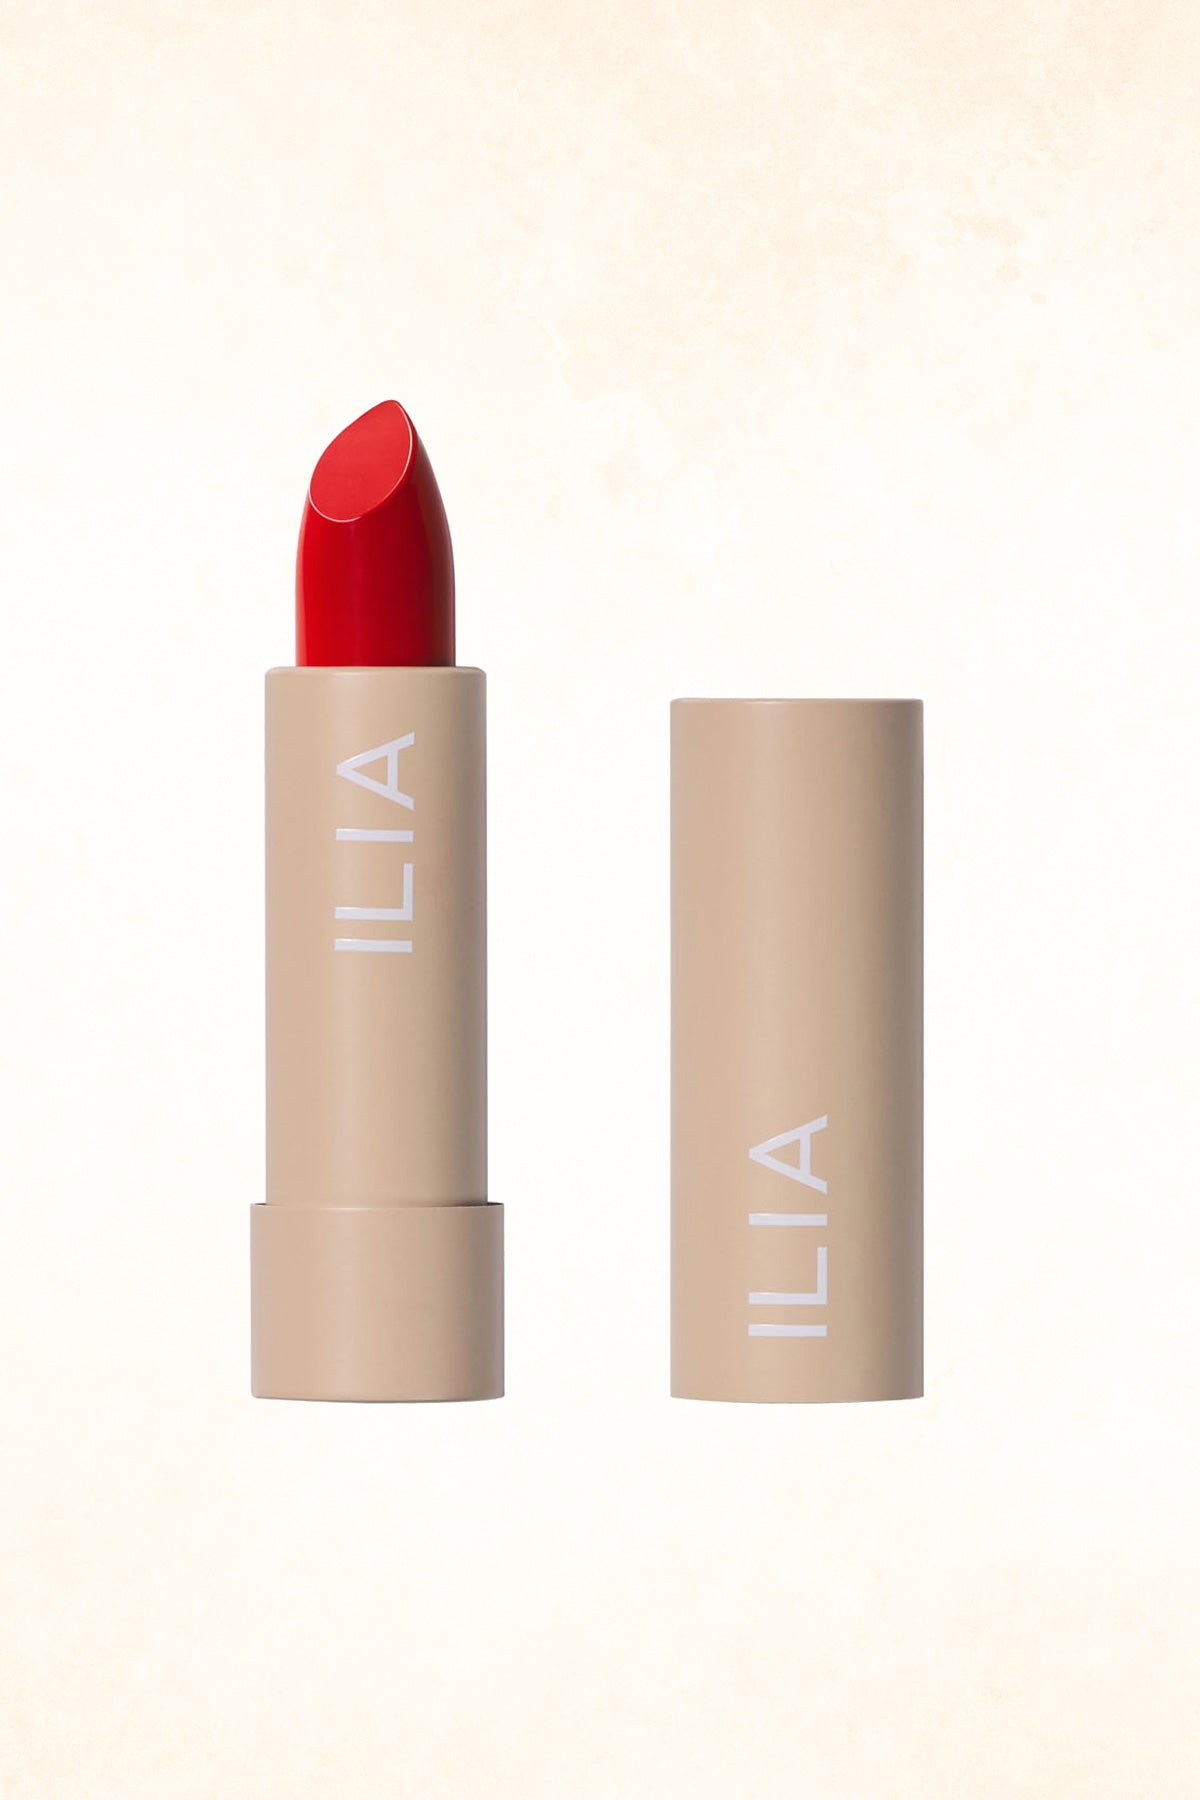 ILIA - Color Block High Impact Lipstick - Flame - 4 g